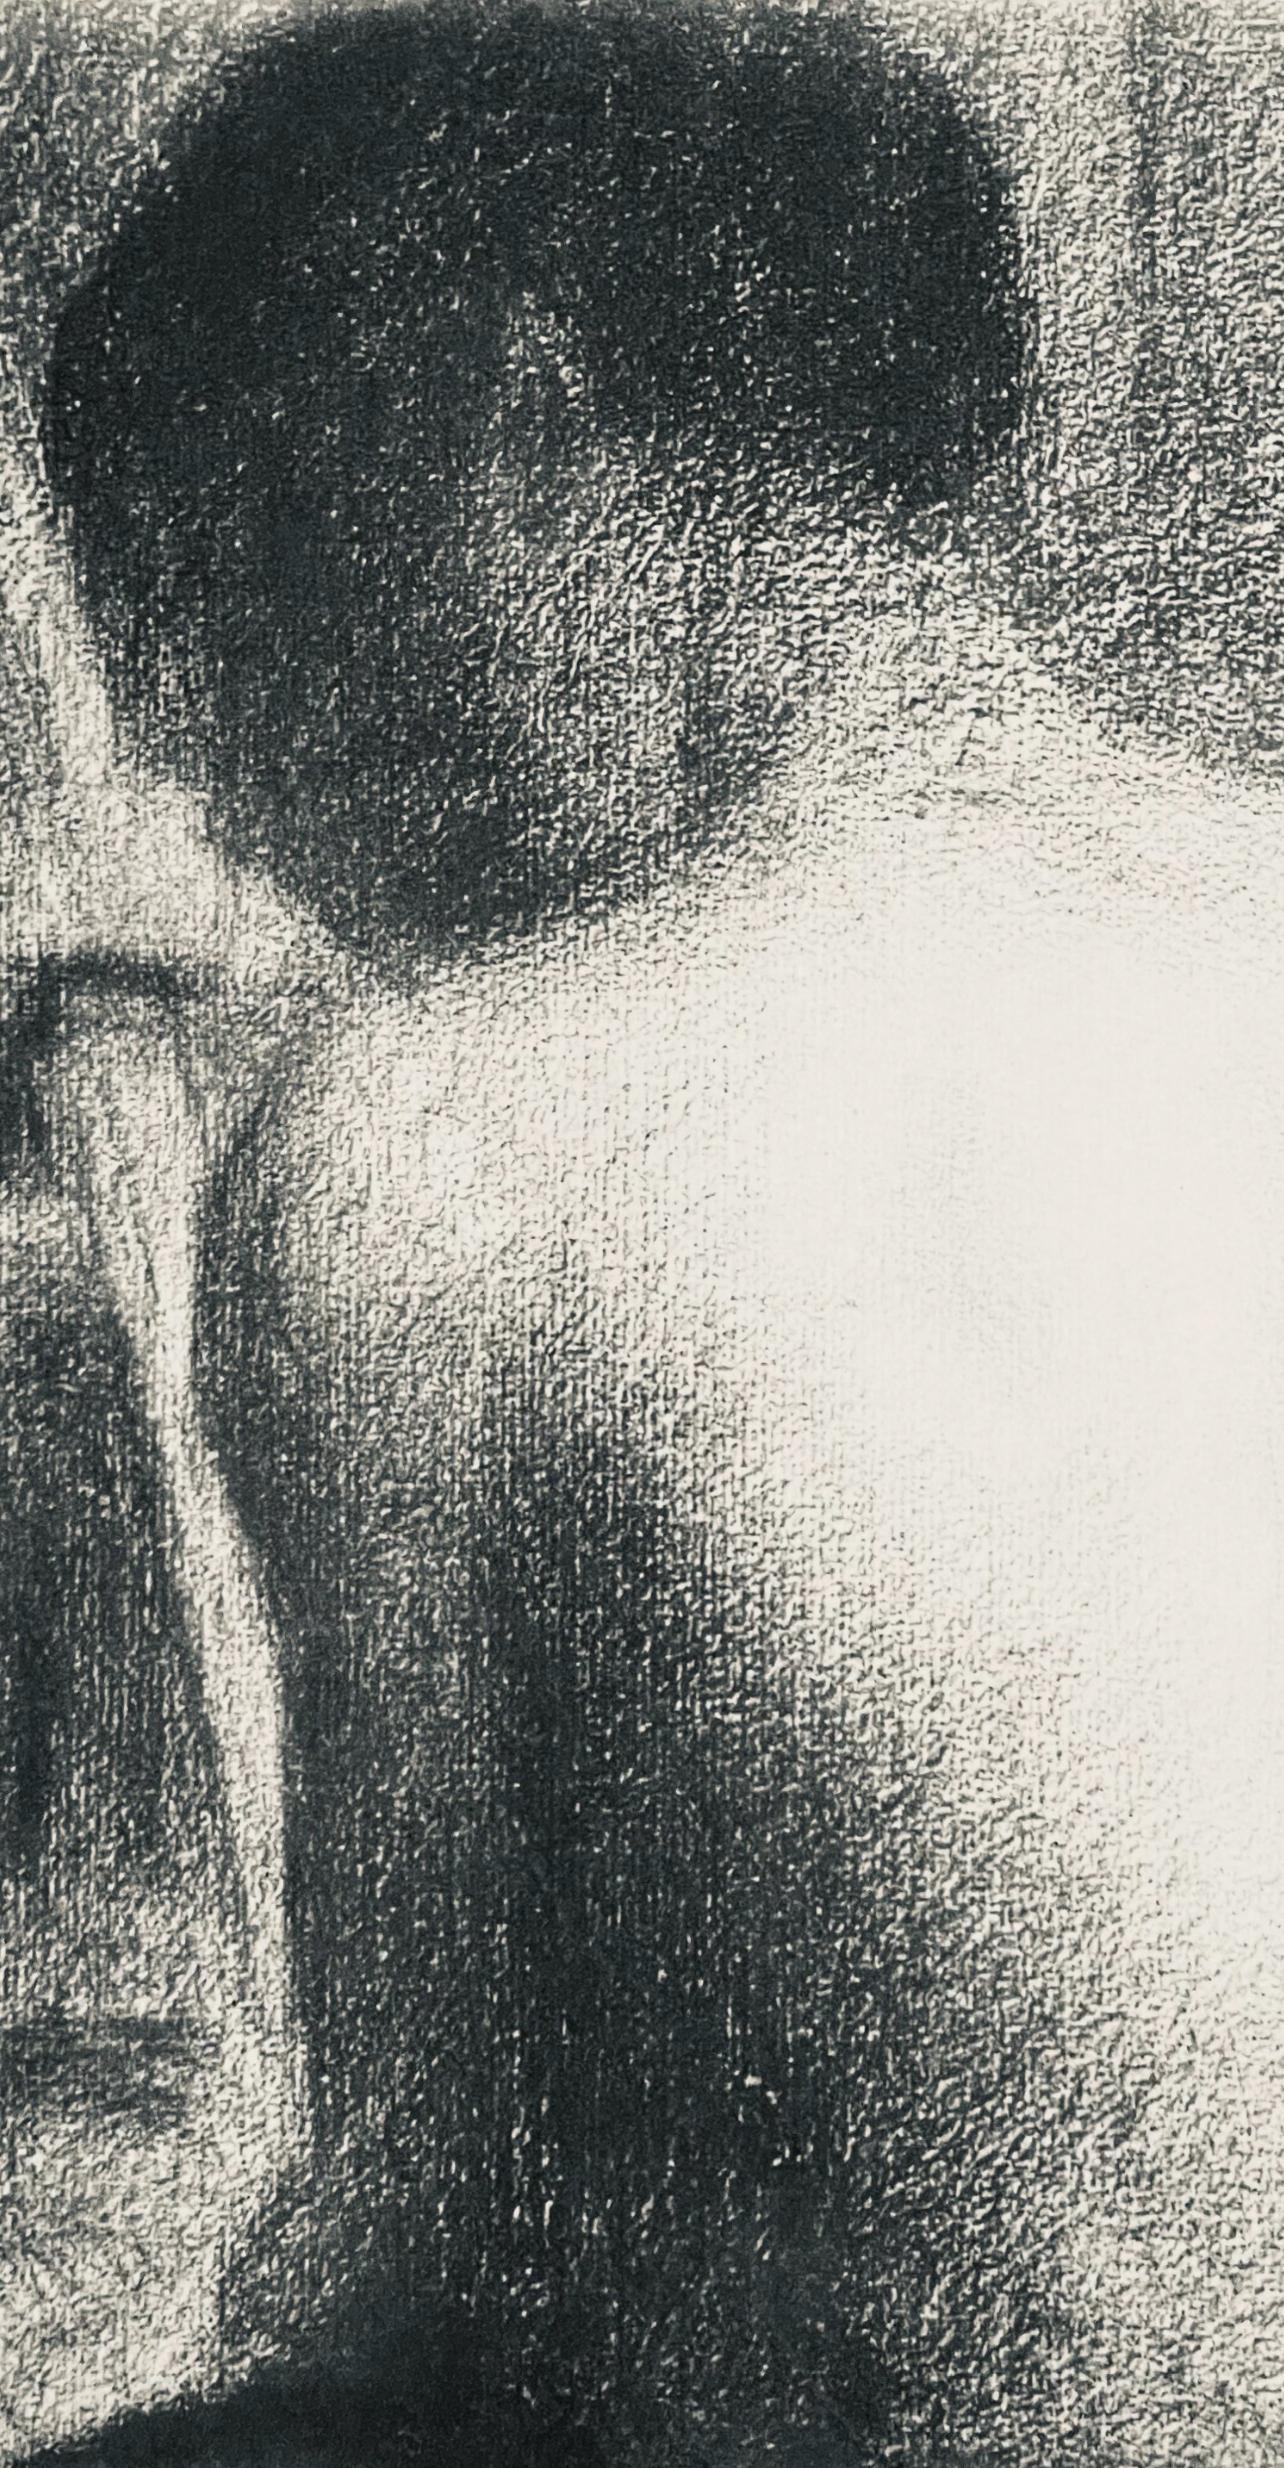 Seurat, Torse d'homme nu, Seurat (nach) – Print von Georges Seurat